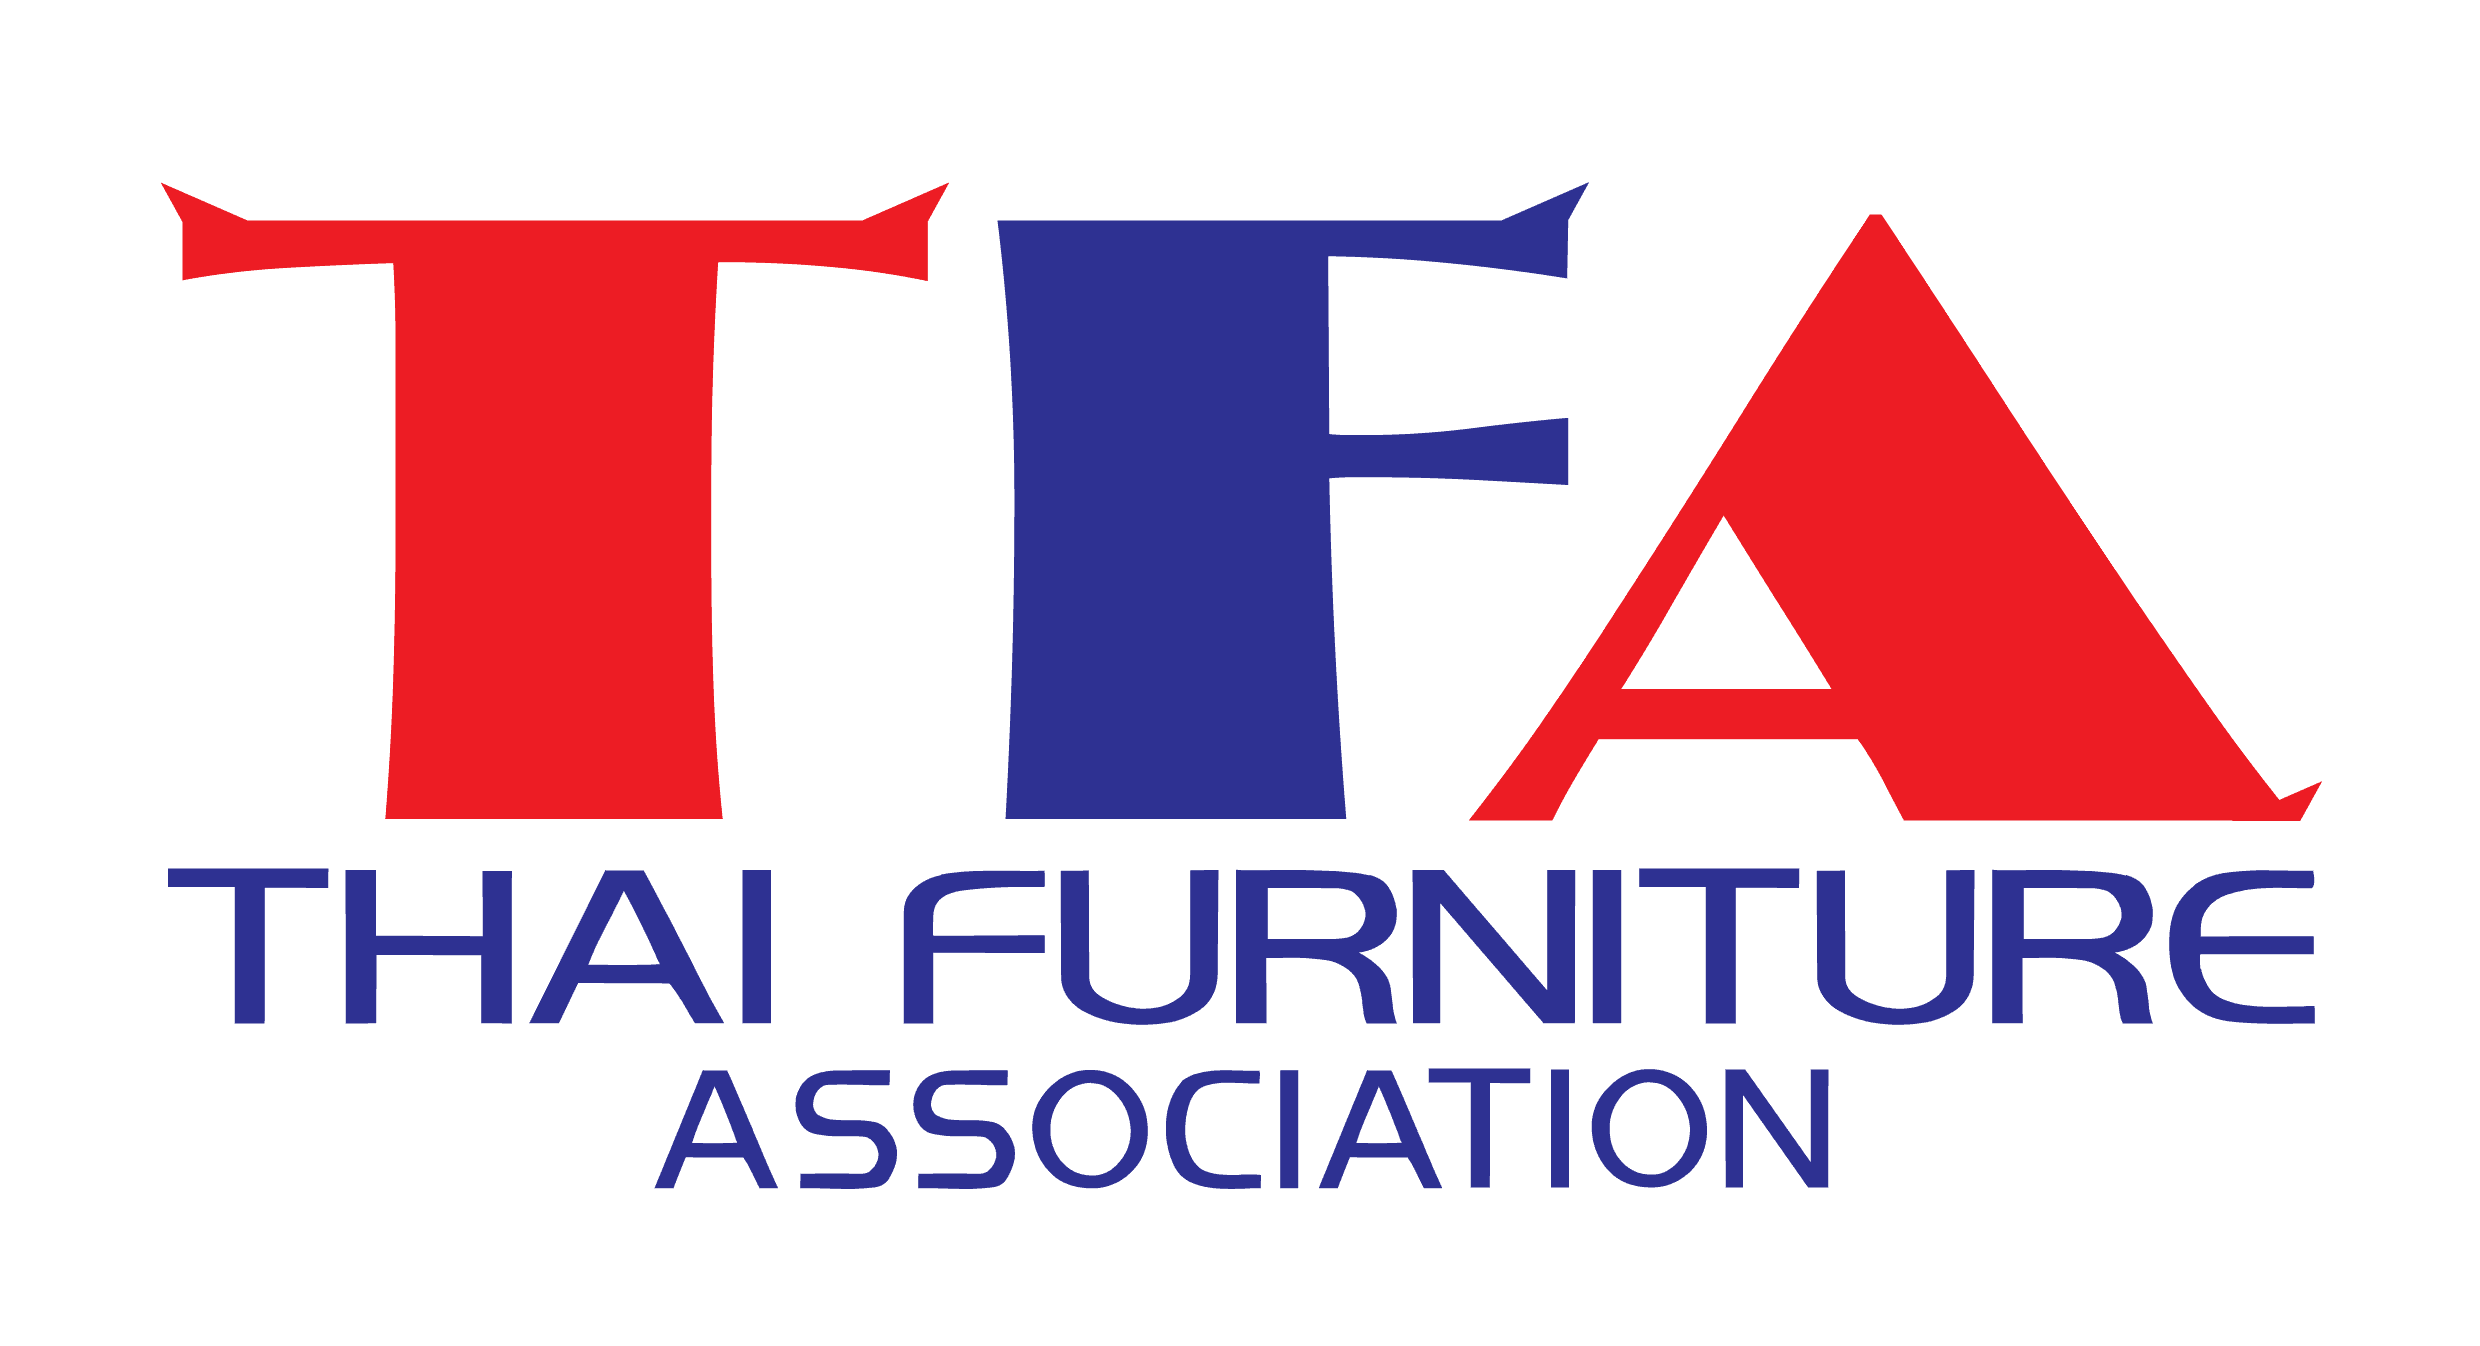 logo-TFA-New-cs5-01 พื้นหลังสีใส